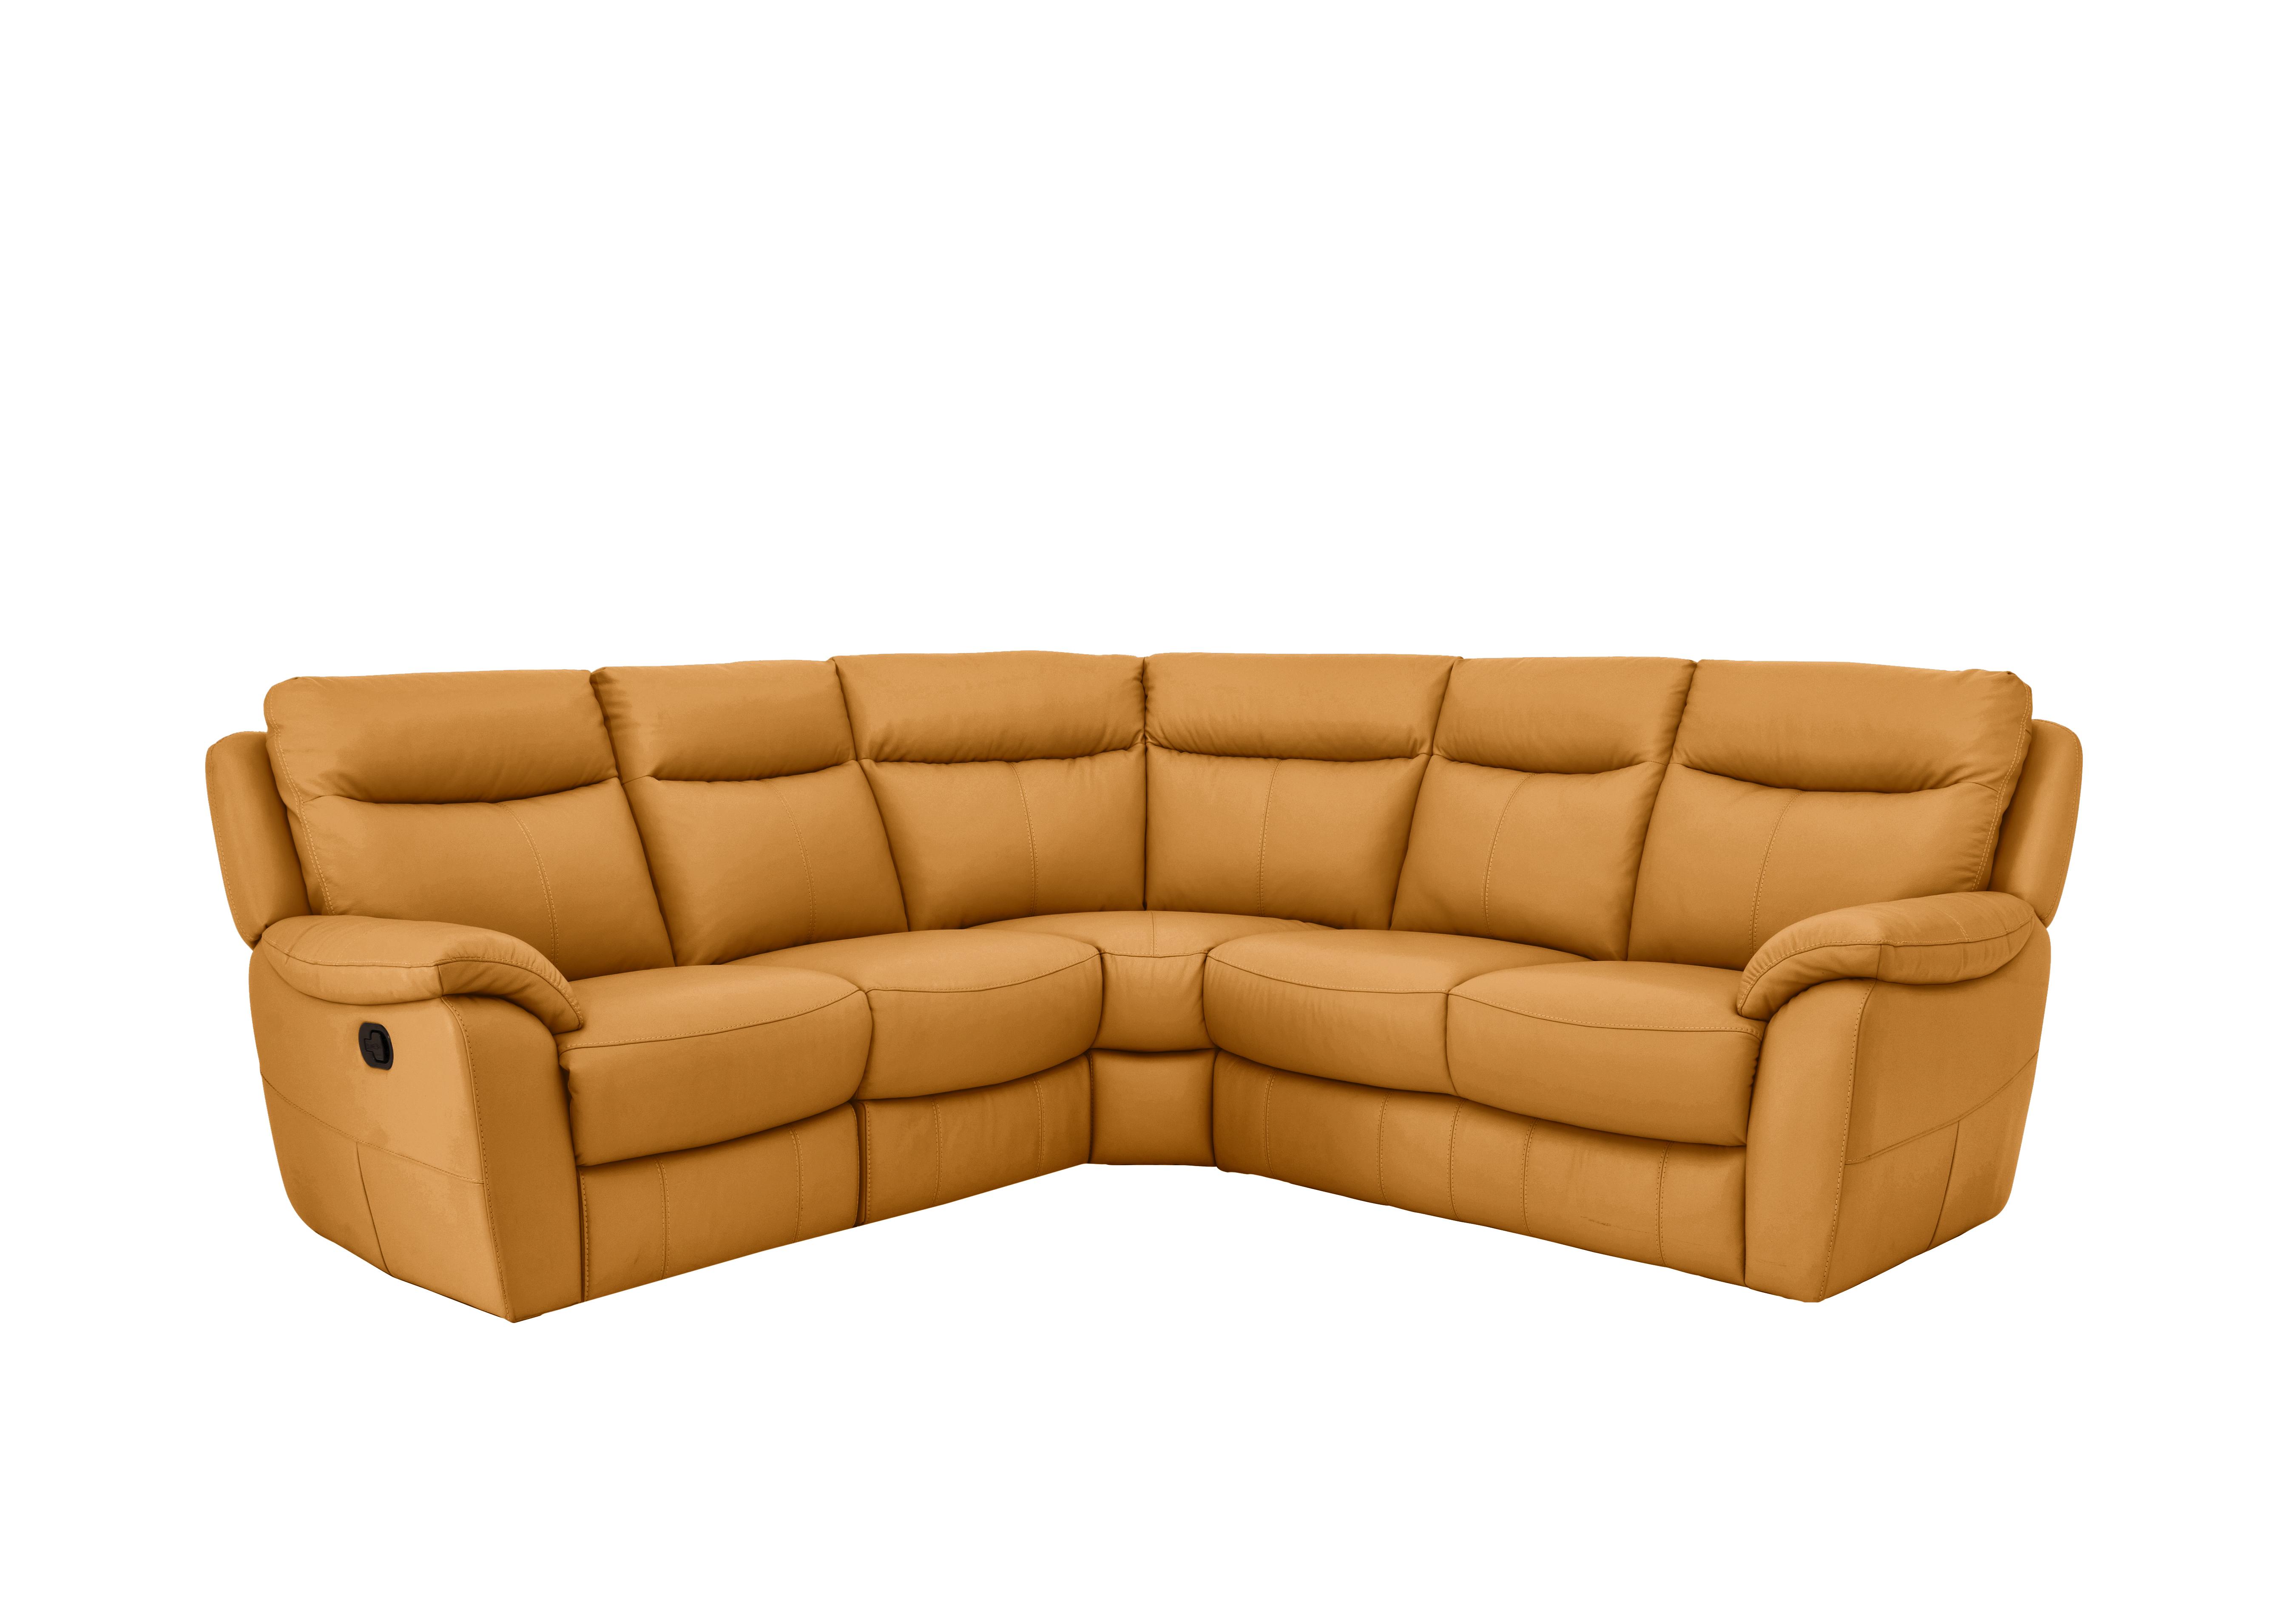 Snug Leather Corner Sofa in Bv-335e Honey Yellow on Furniture Village